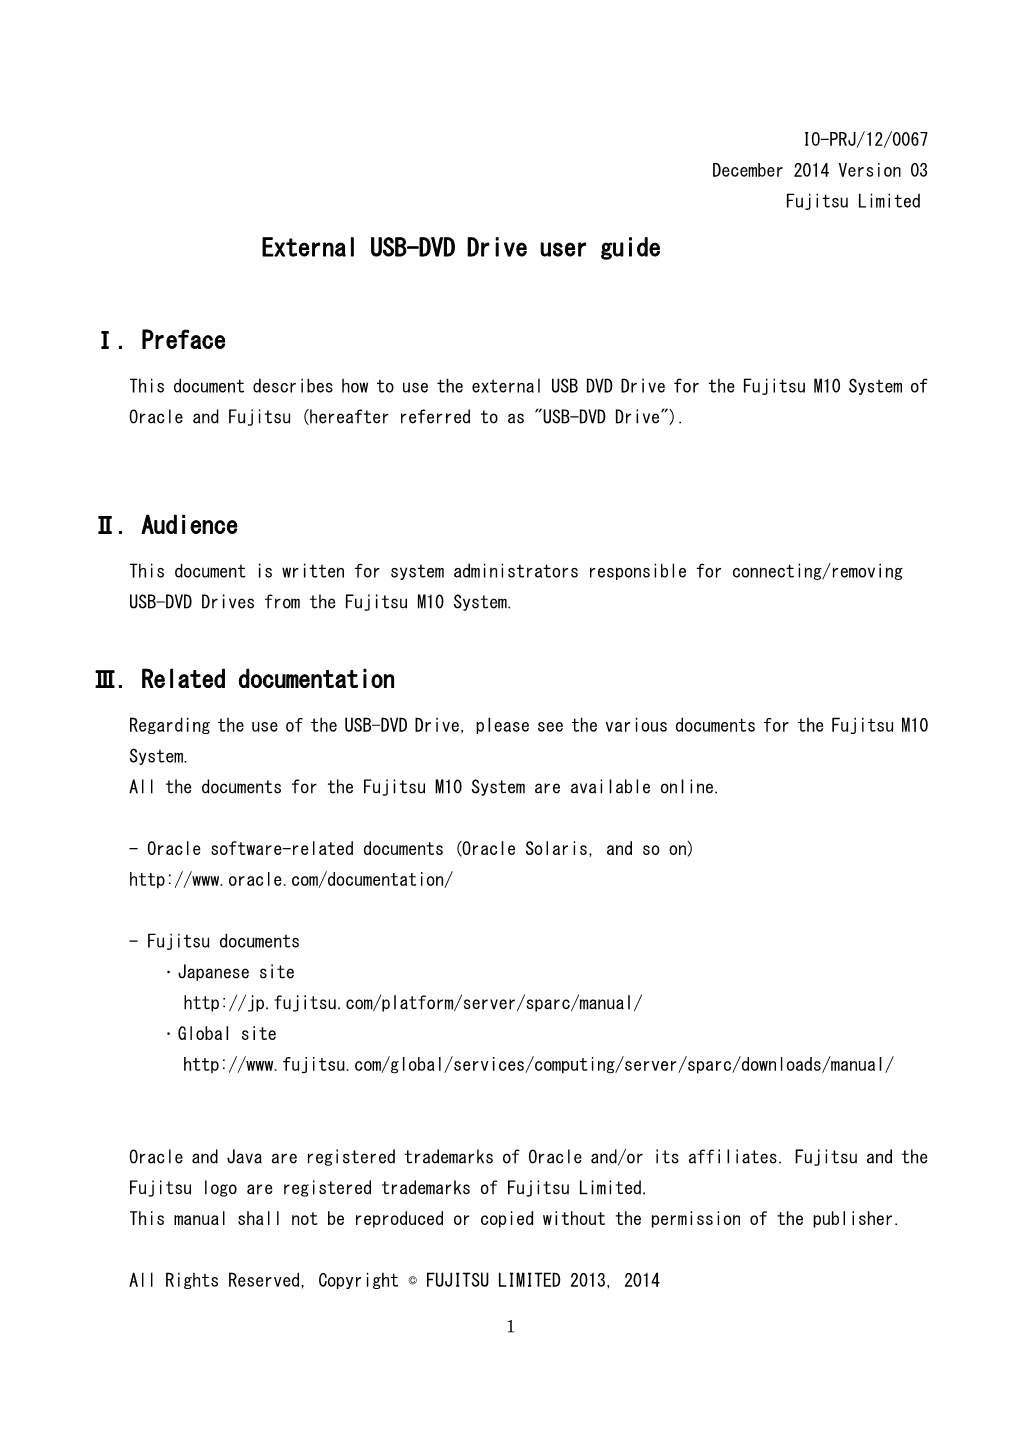 External USB-DVD Drive User Guide Ⅰ. Preface